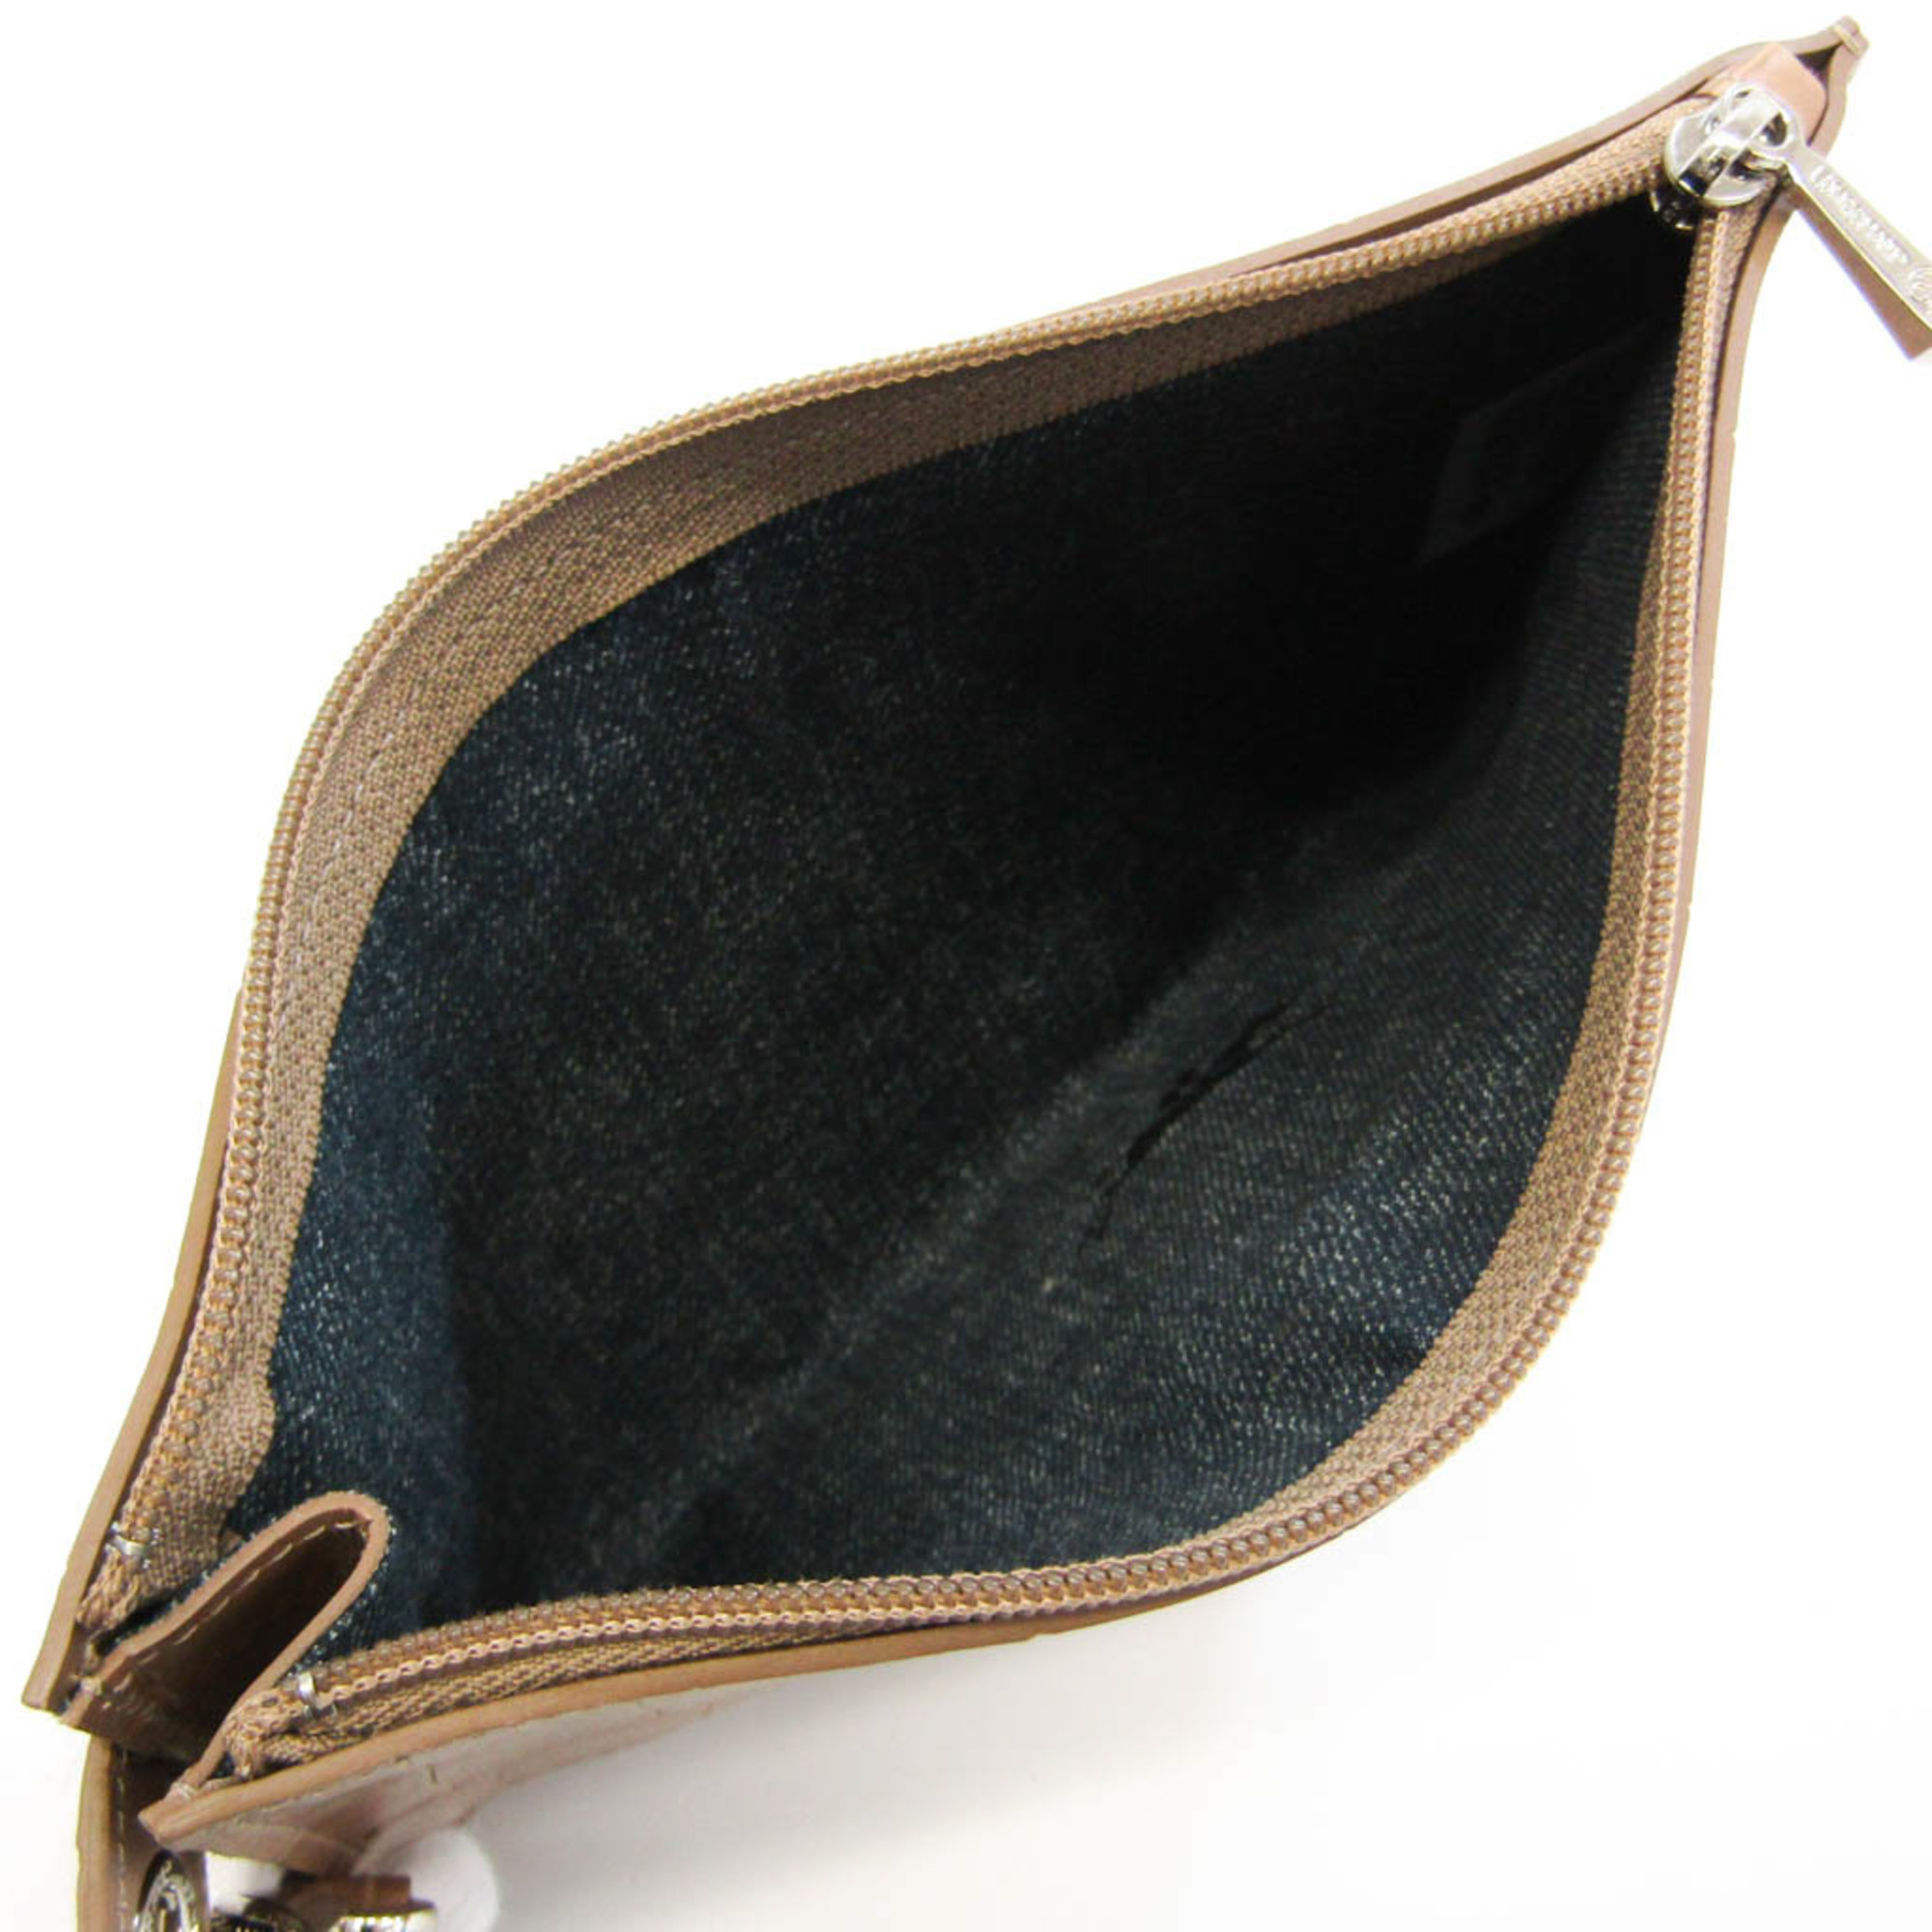 Longchamp 2541 858 484 Women's Leather Clutch Bag Beige